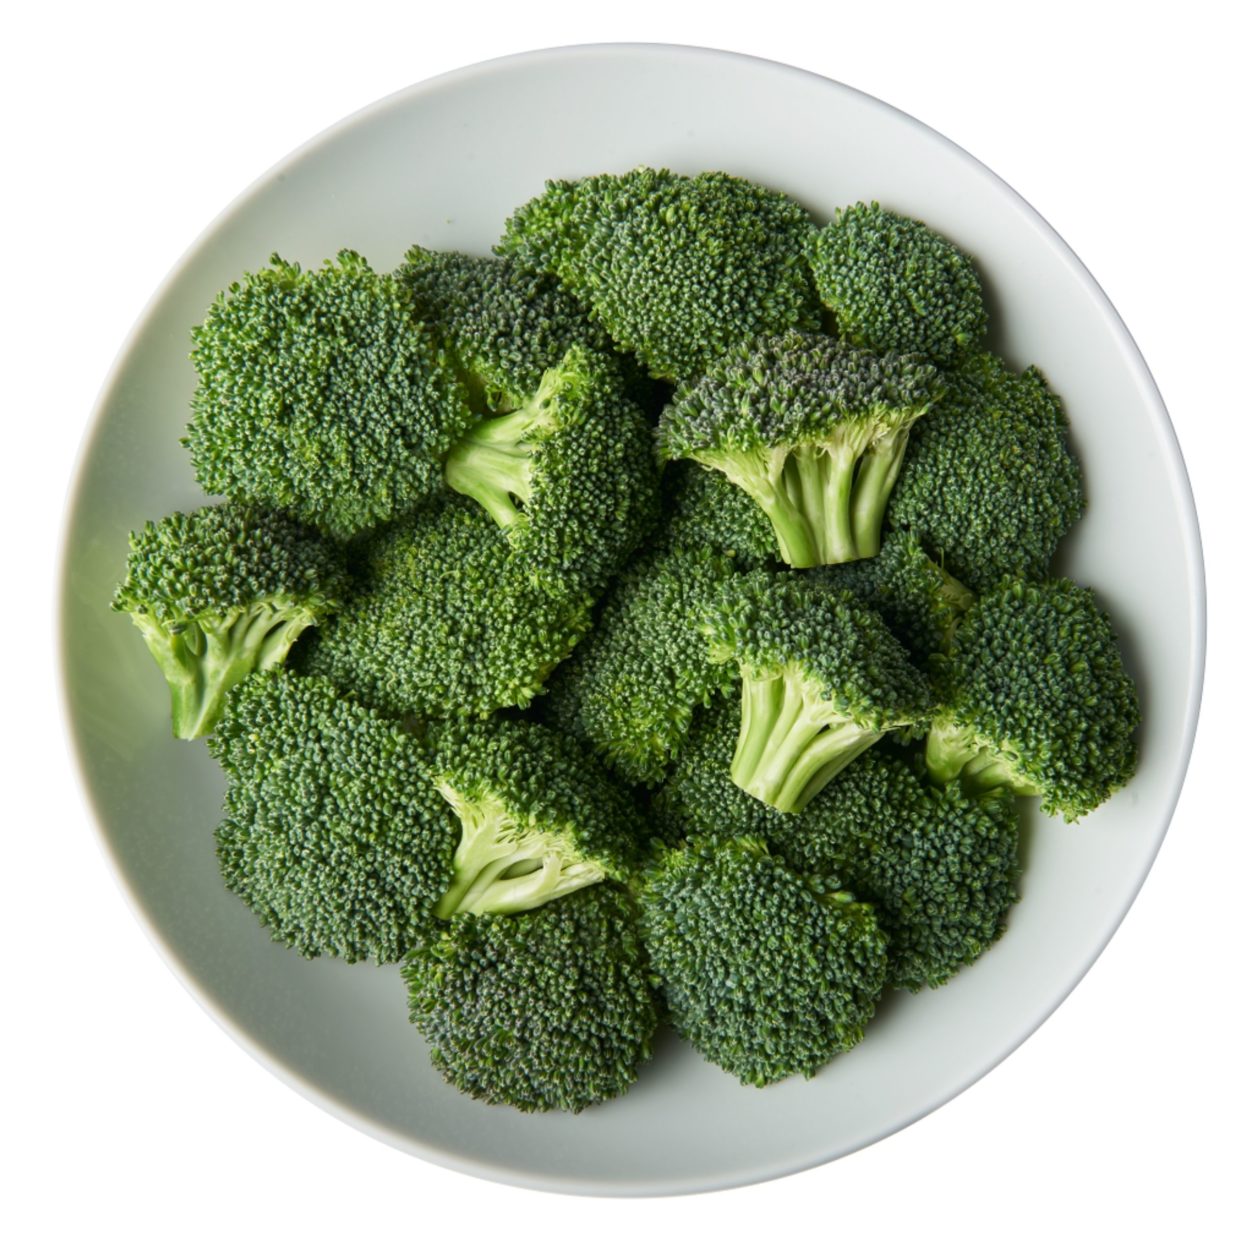 Broccoli Florets